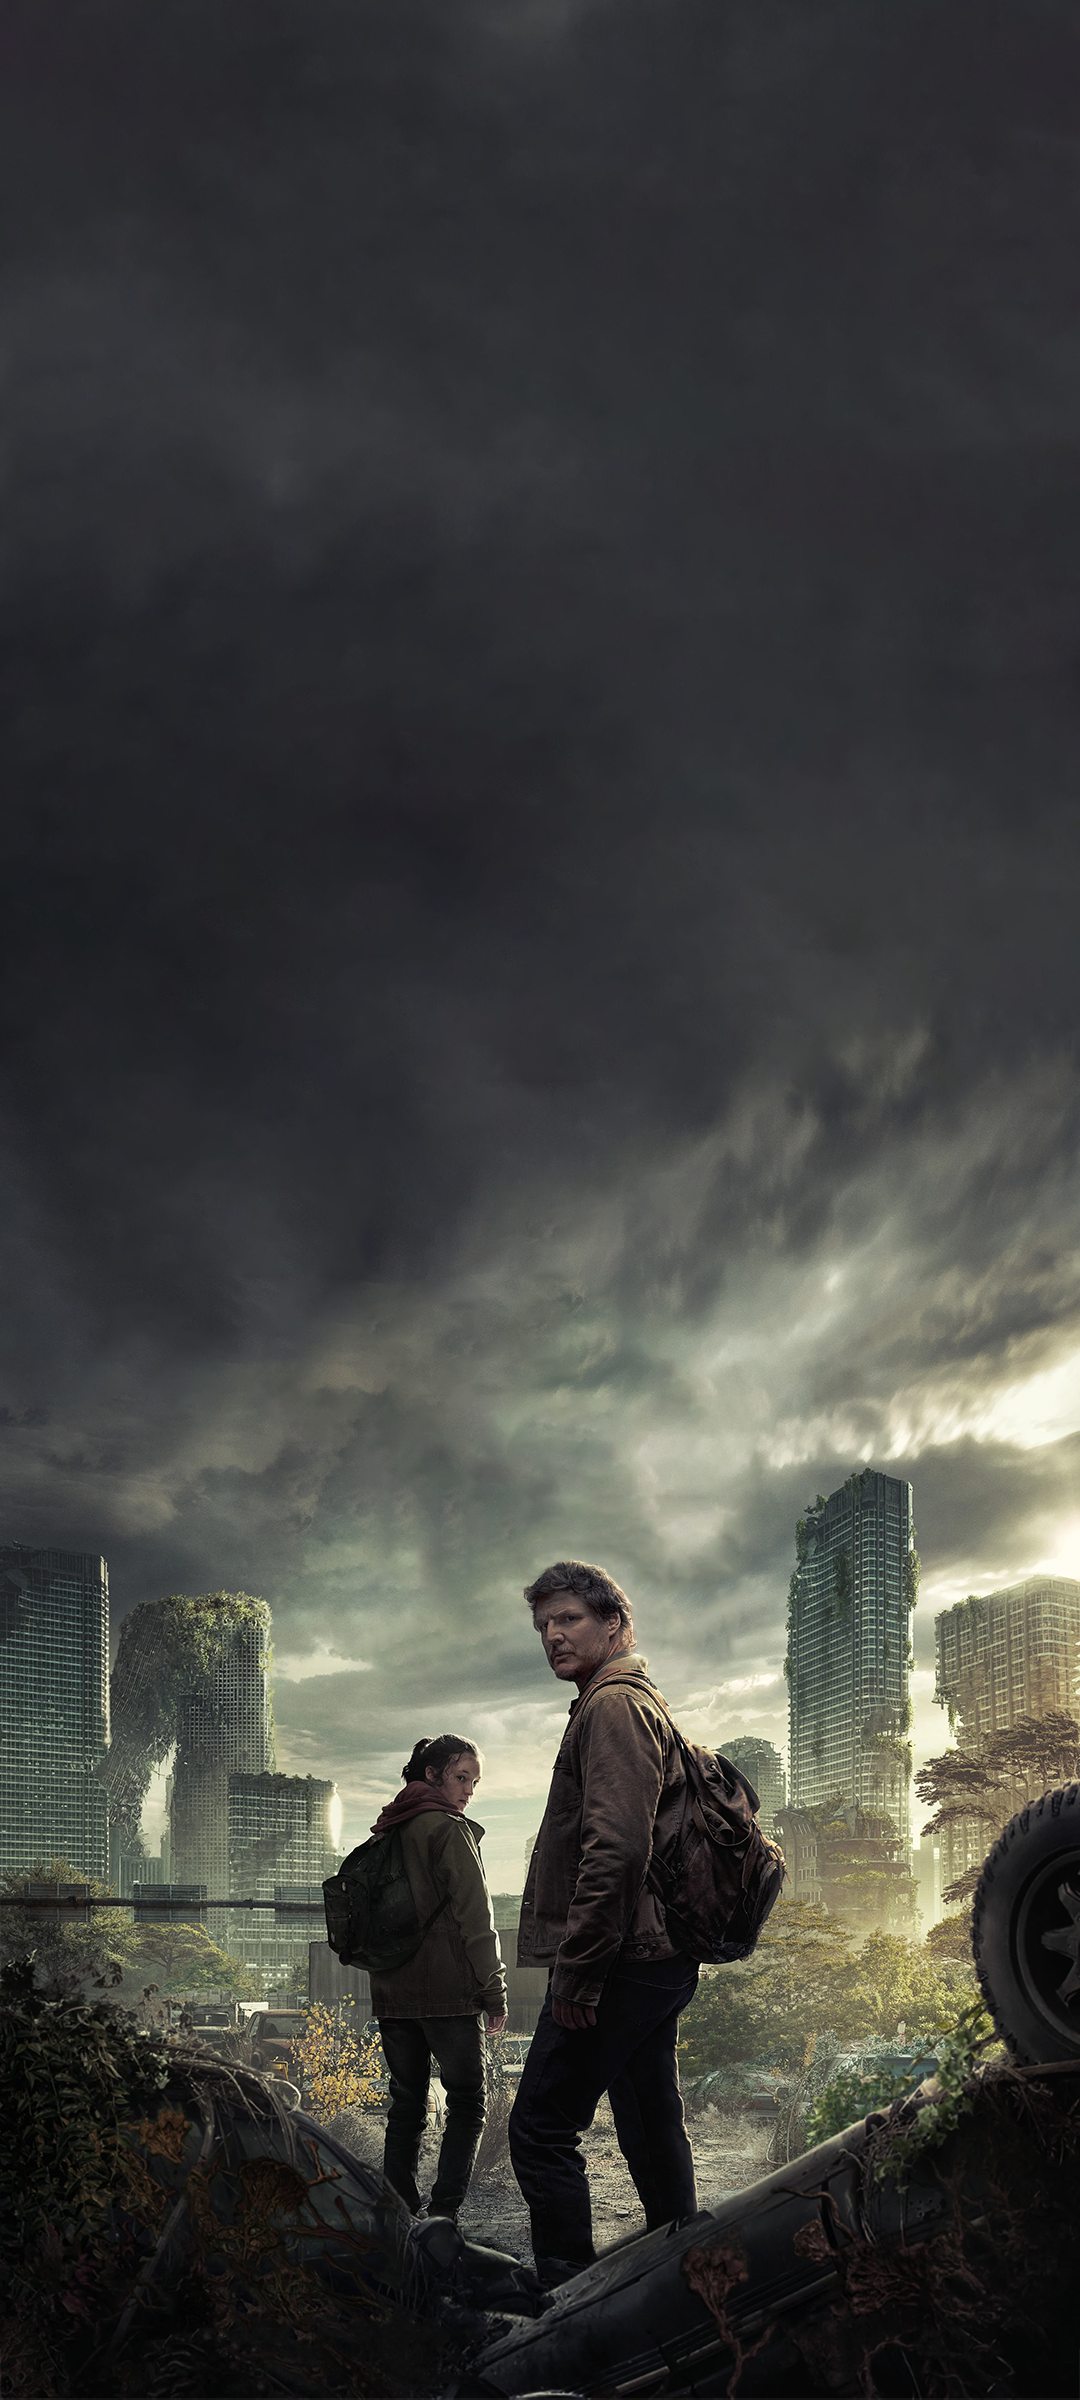 The Last of Us HBO Original Series Poster 4K Ultra HD Mobile Wallpaper